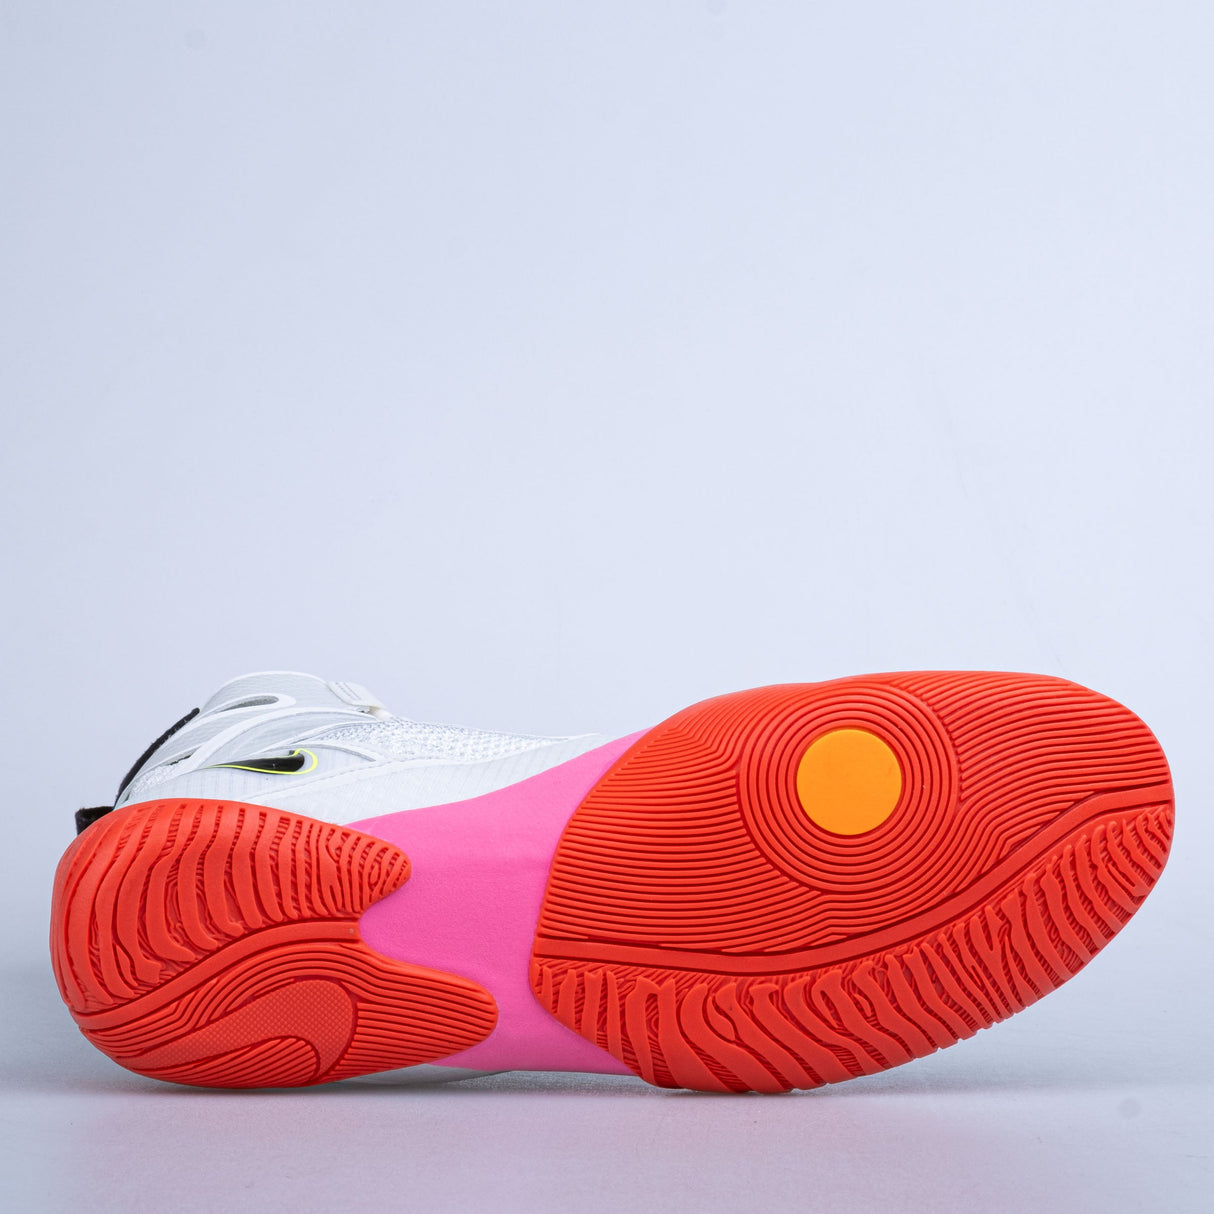 Nike Chaussures de Boxe HyperKO 2 Special Edition - blanc/noir/rouge, DJ4475121